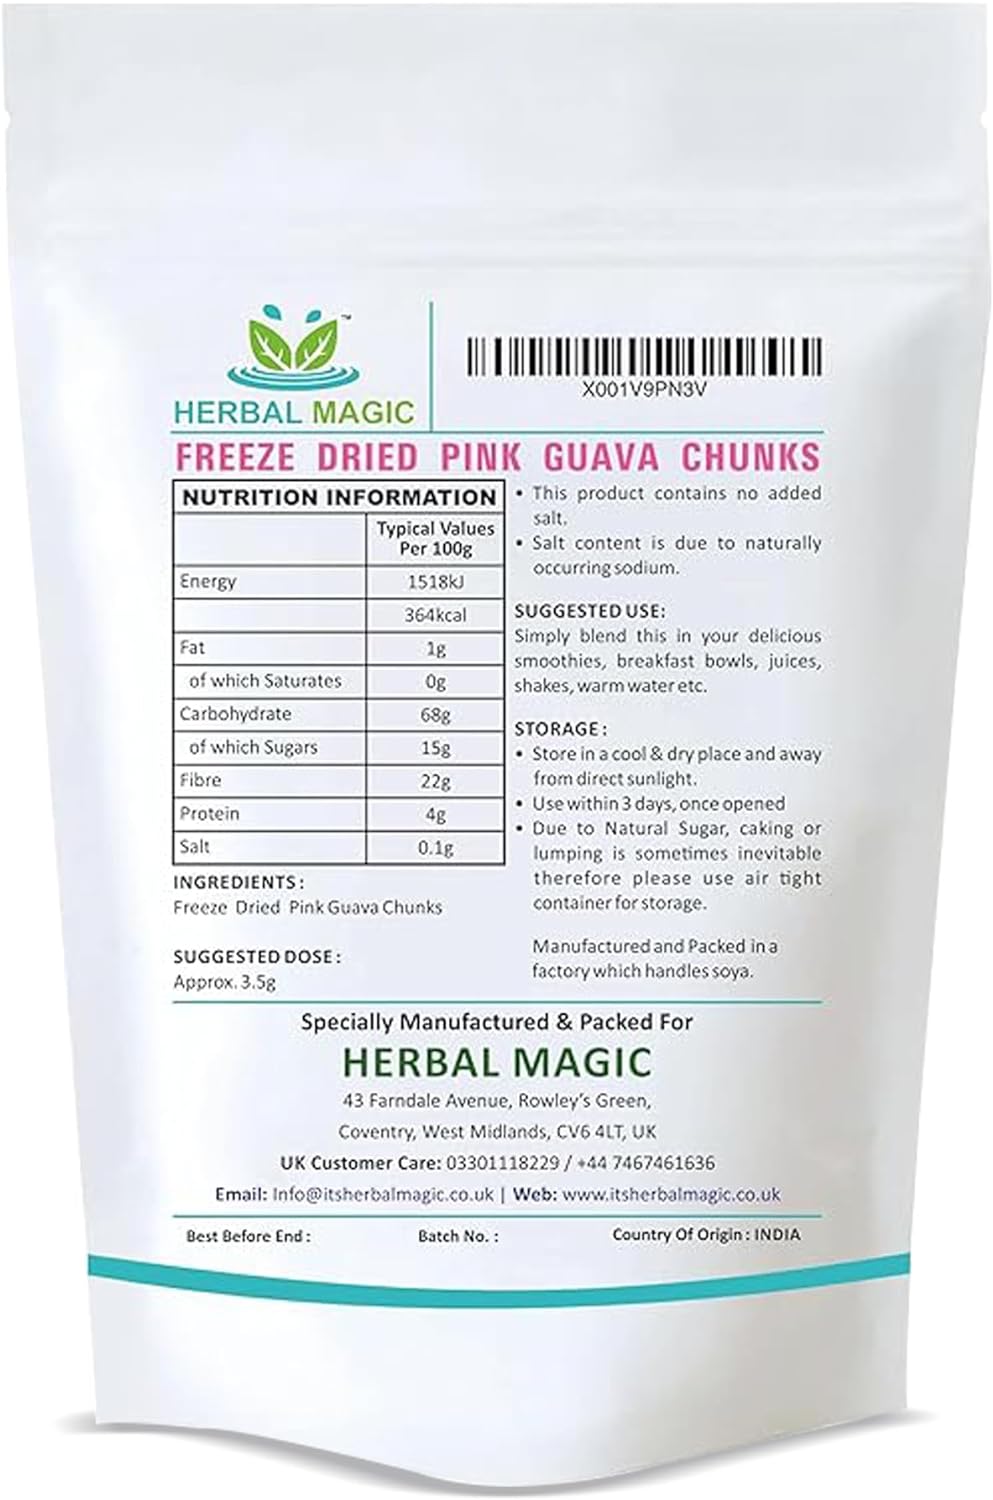 Freeze Dried Pink Guava Chunks